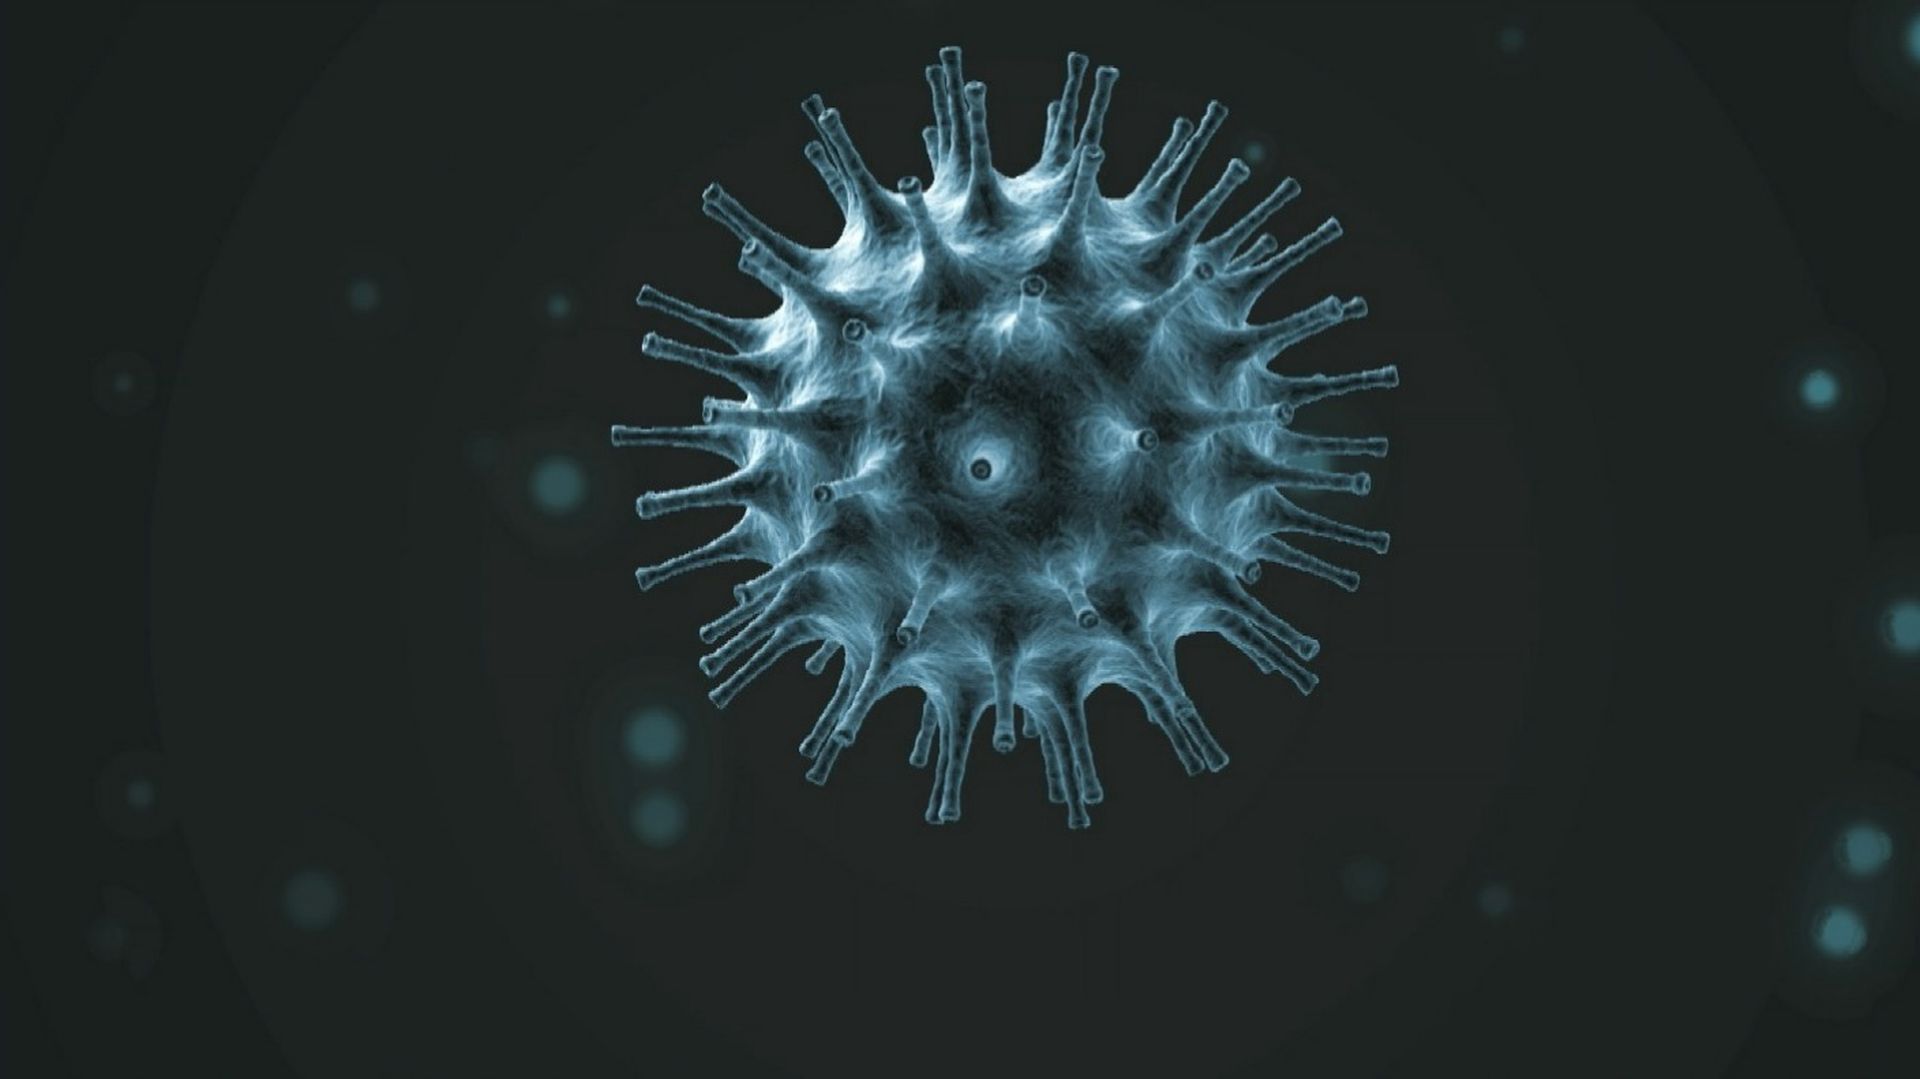 World scientists meet to fight novel coronavirus